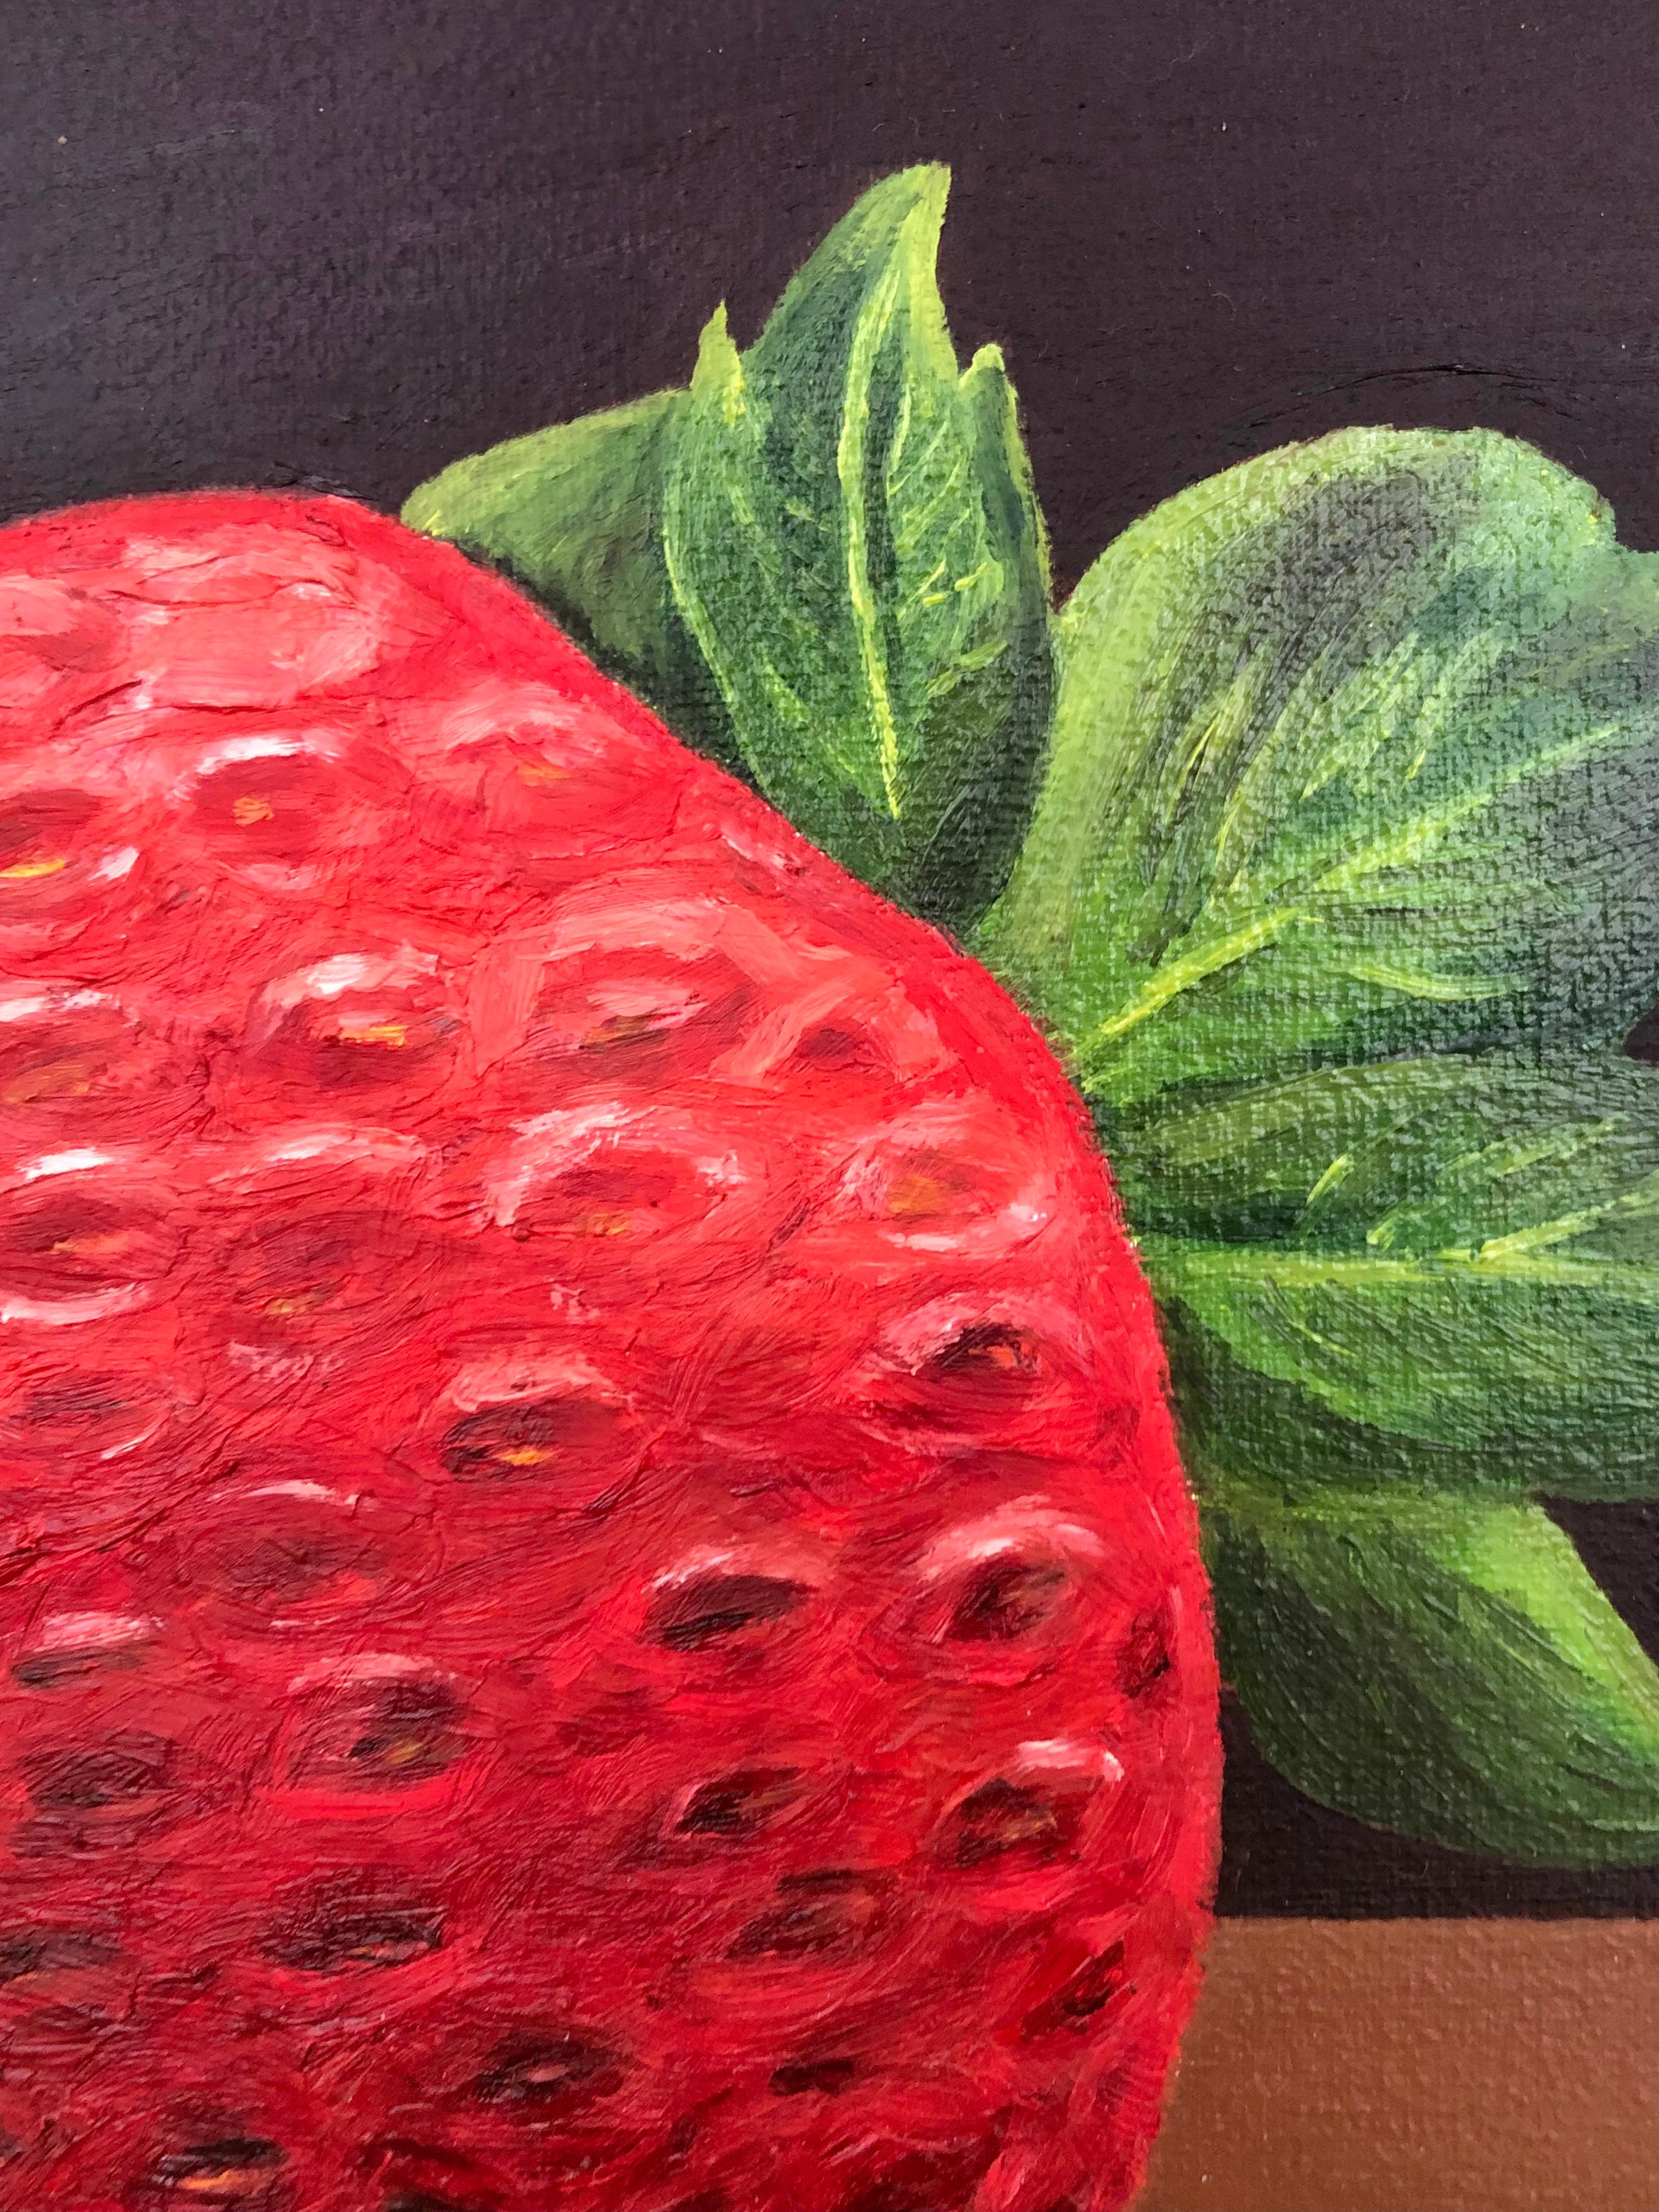 “Just strawberry”) - Painting by Nataliia Zhuravlova